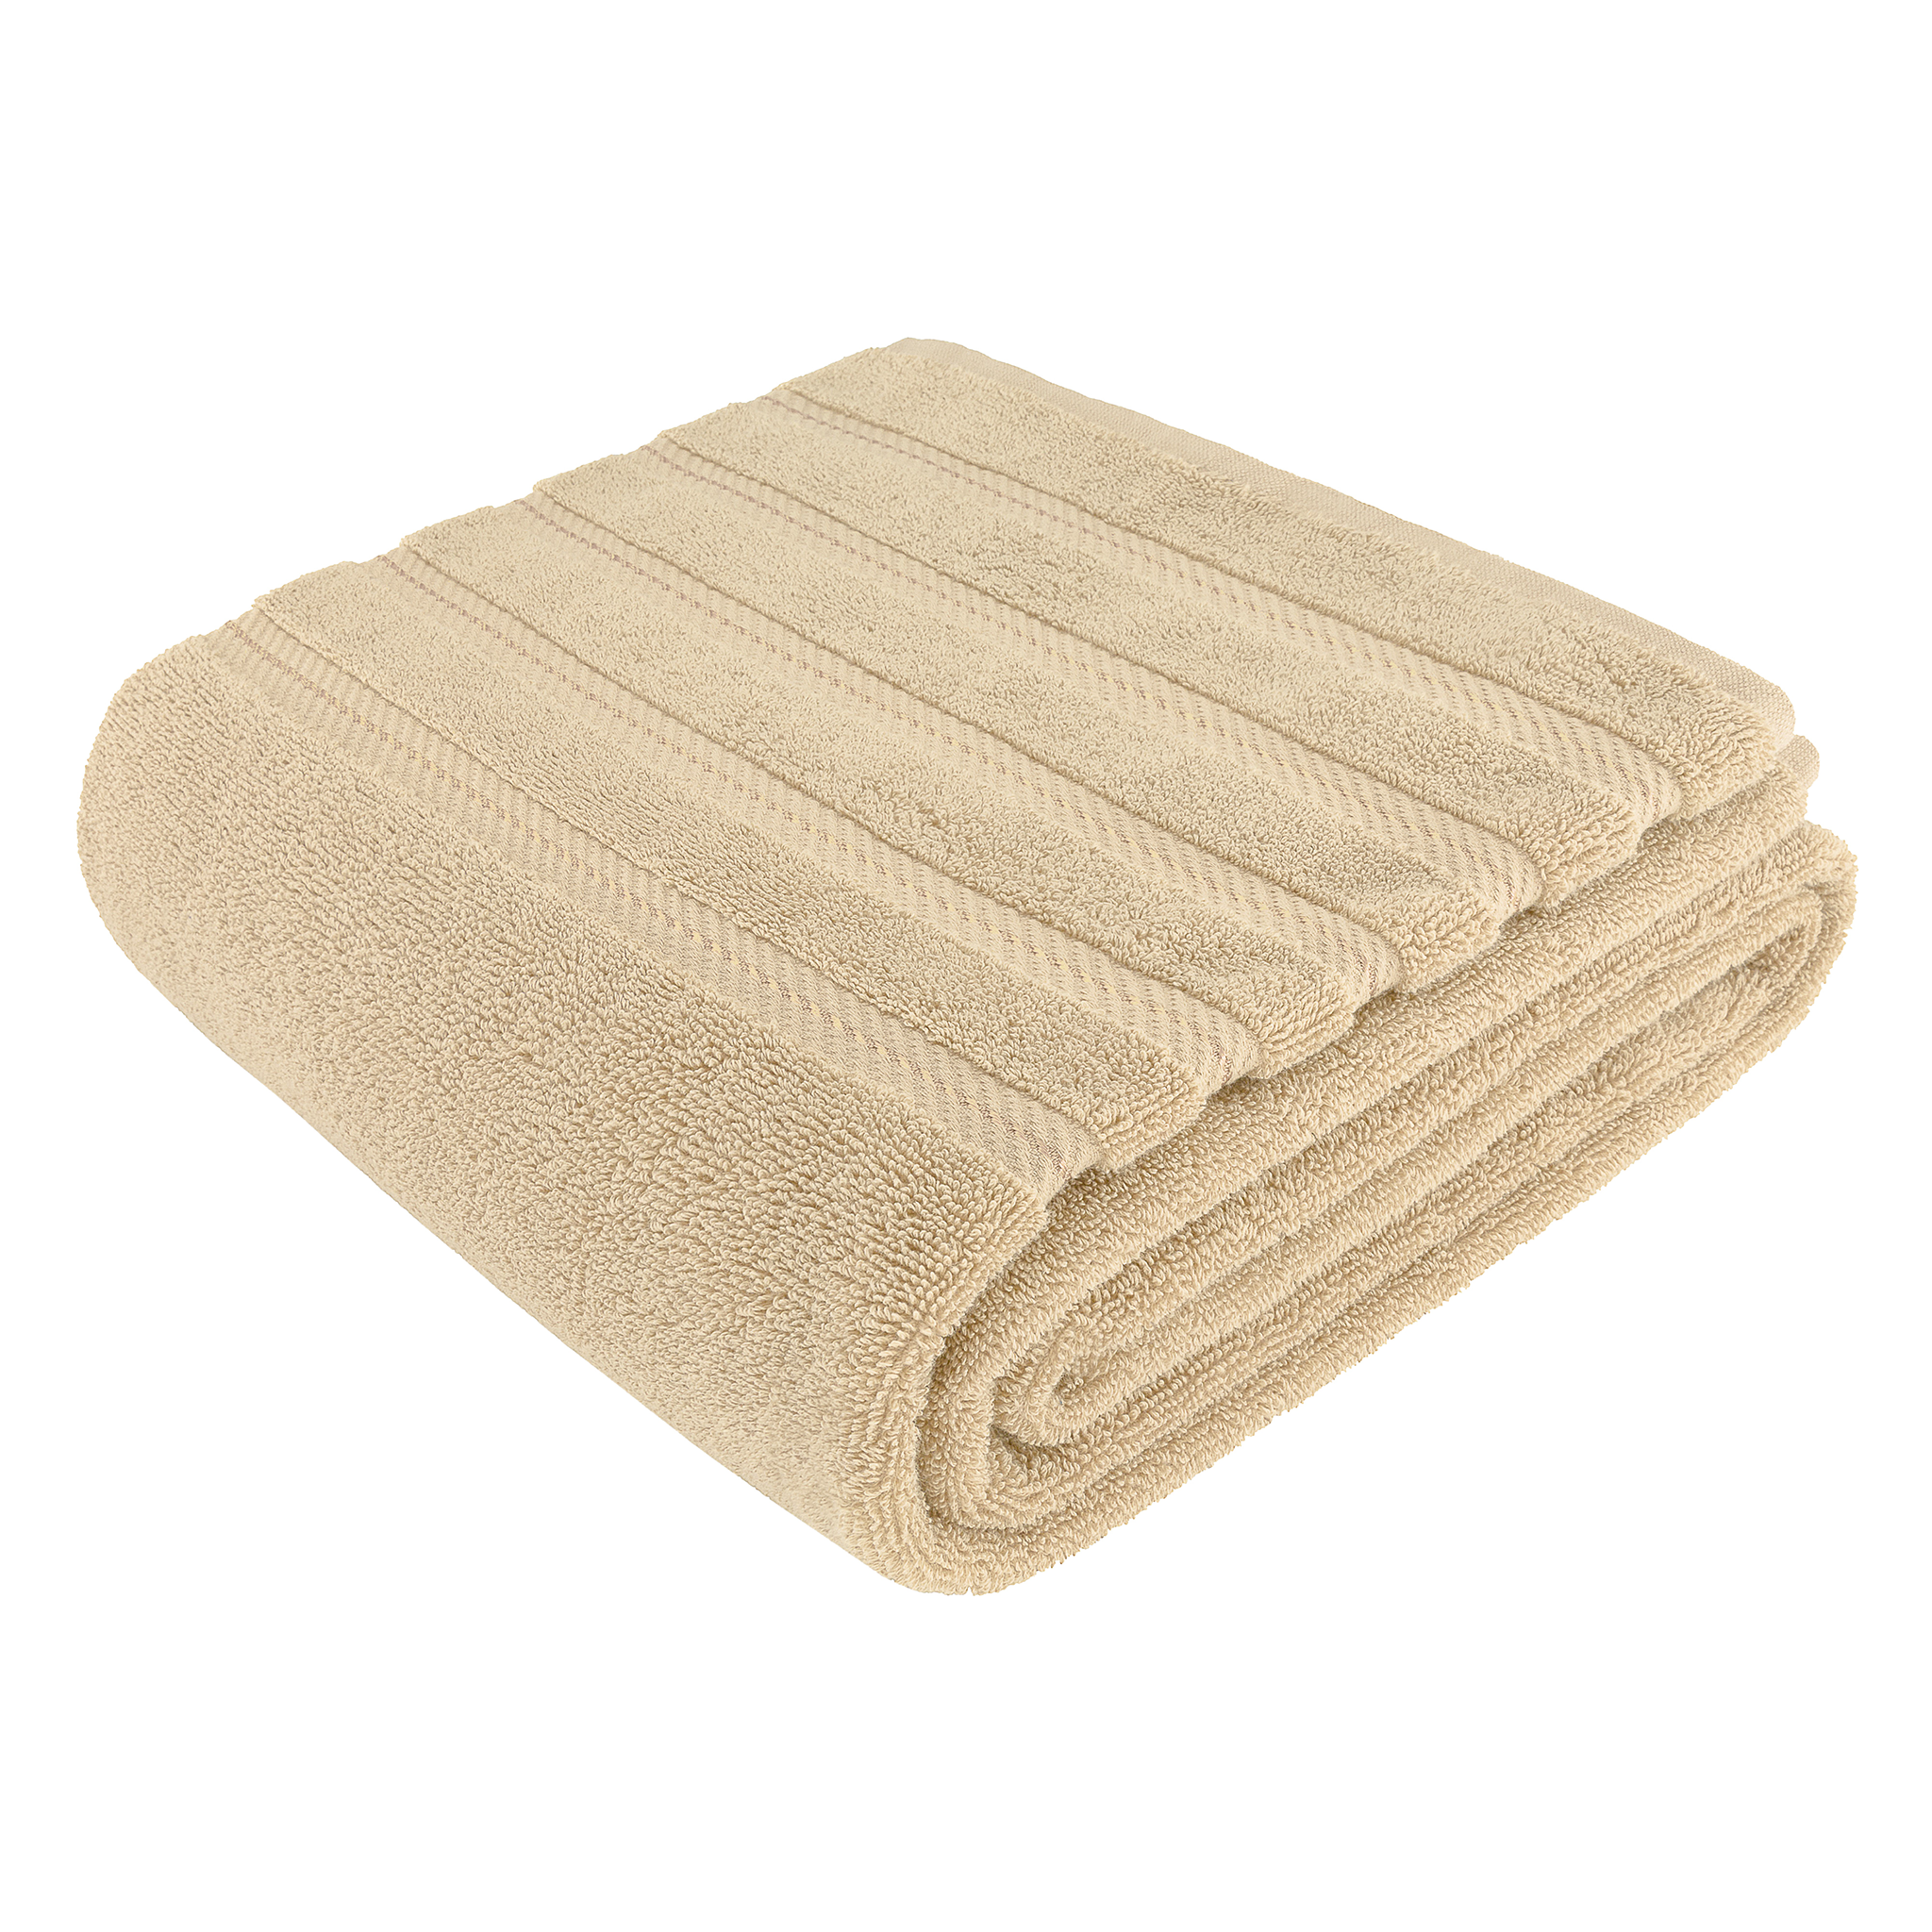 American Soft Linen - 35x70 Jumbo Bath Sheet Turkish Bath Towel - 16 Piece Case Pack - Sand-Taupe - 7